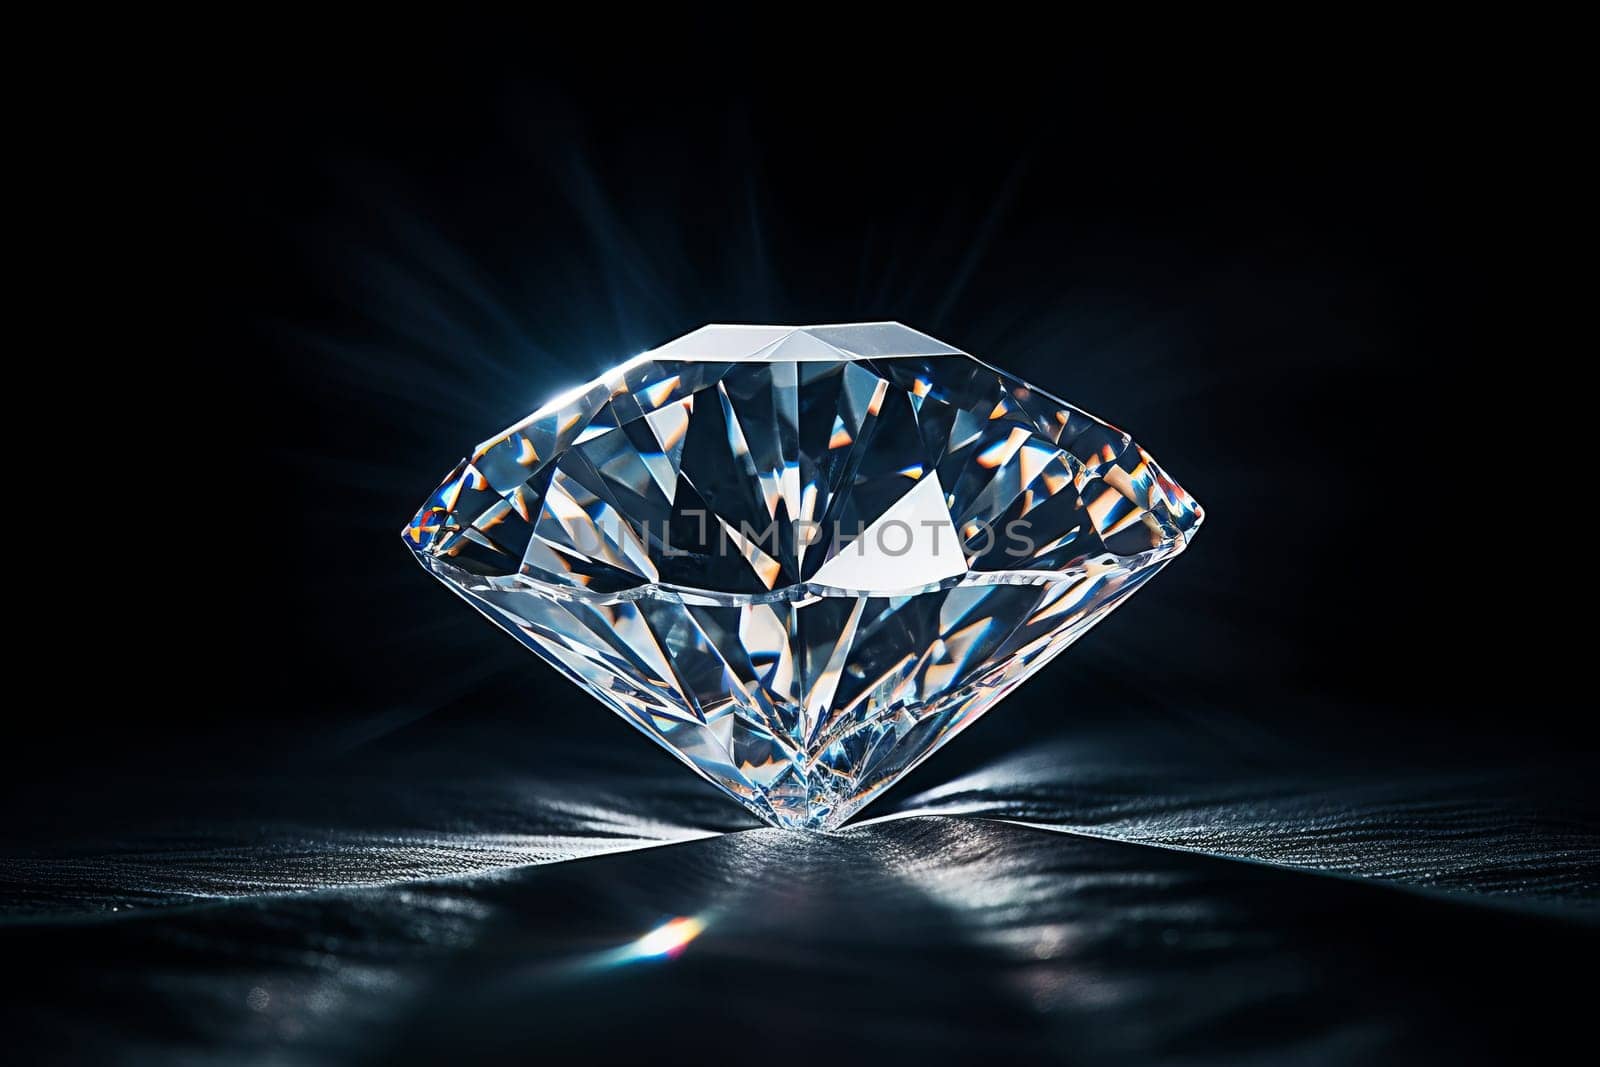 One big brilliant diamond on a dark background